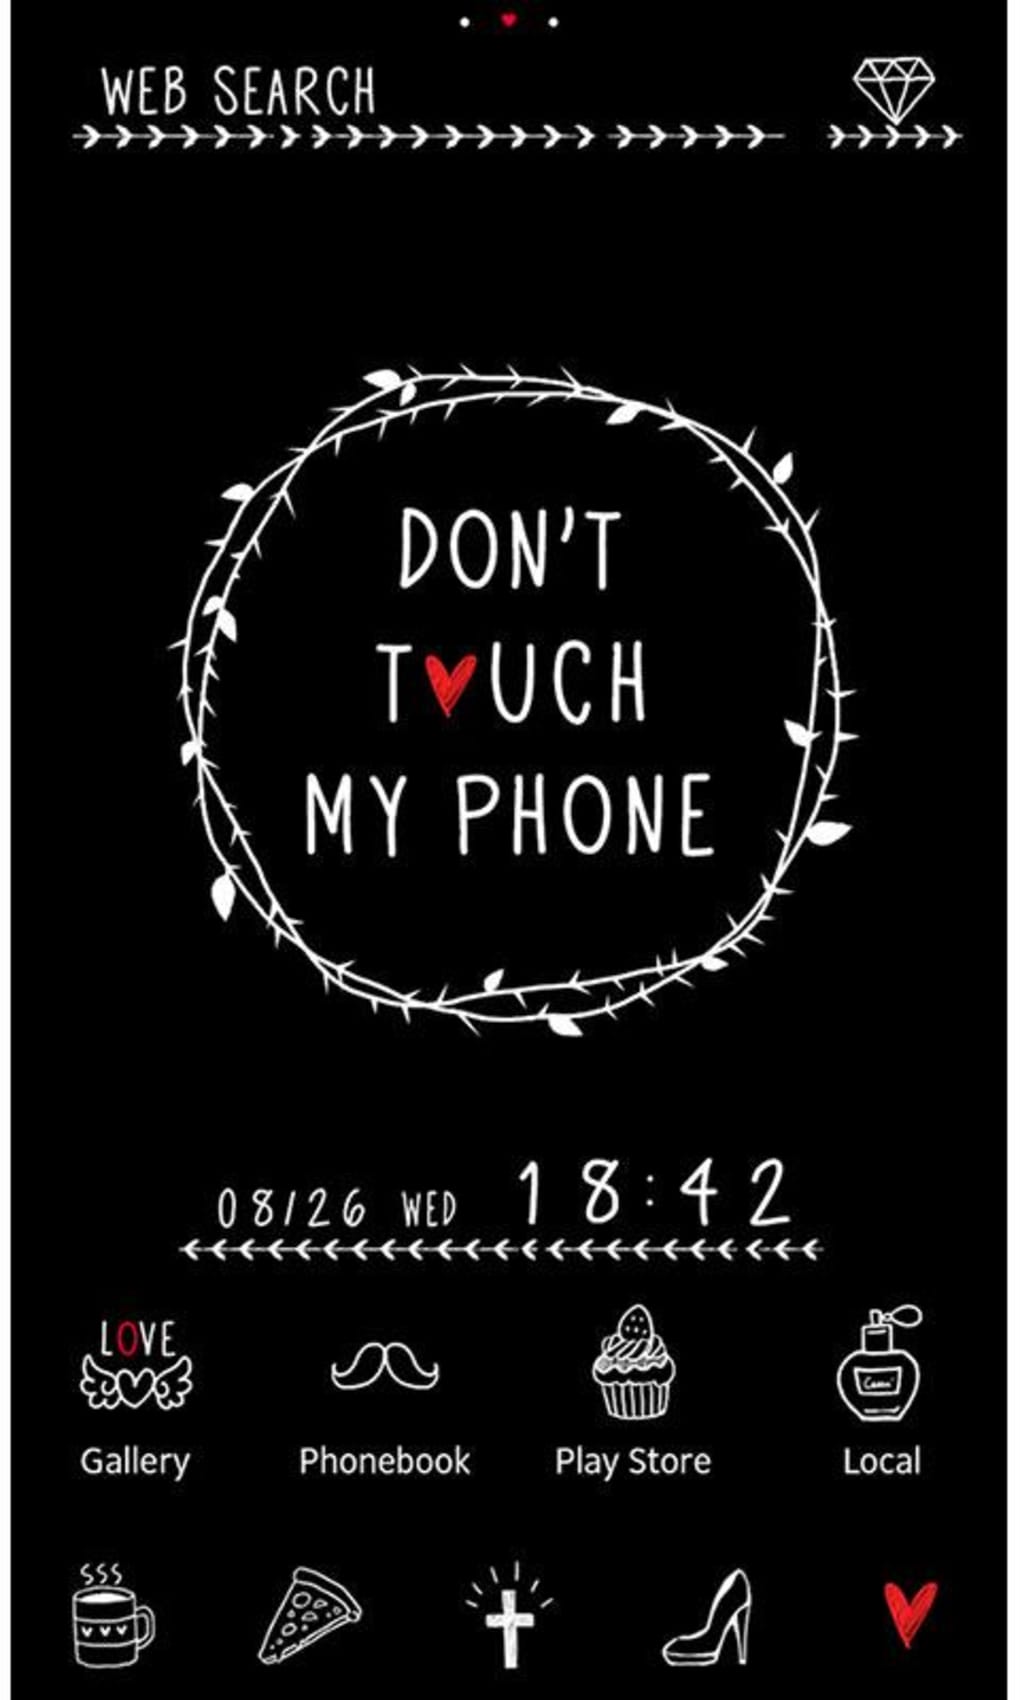 Don't touch my phone wallpaper by Wojciech Augustynowicz